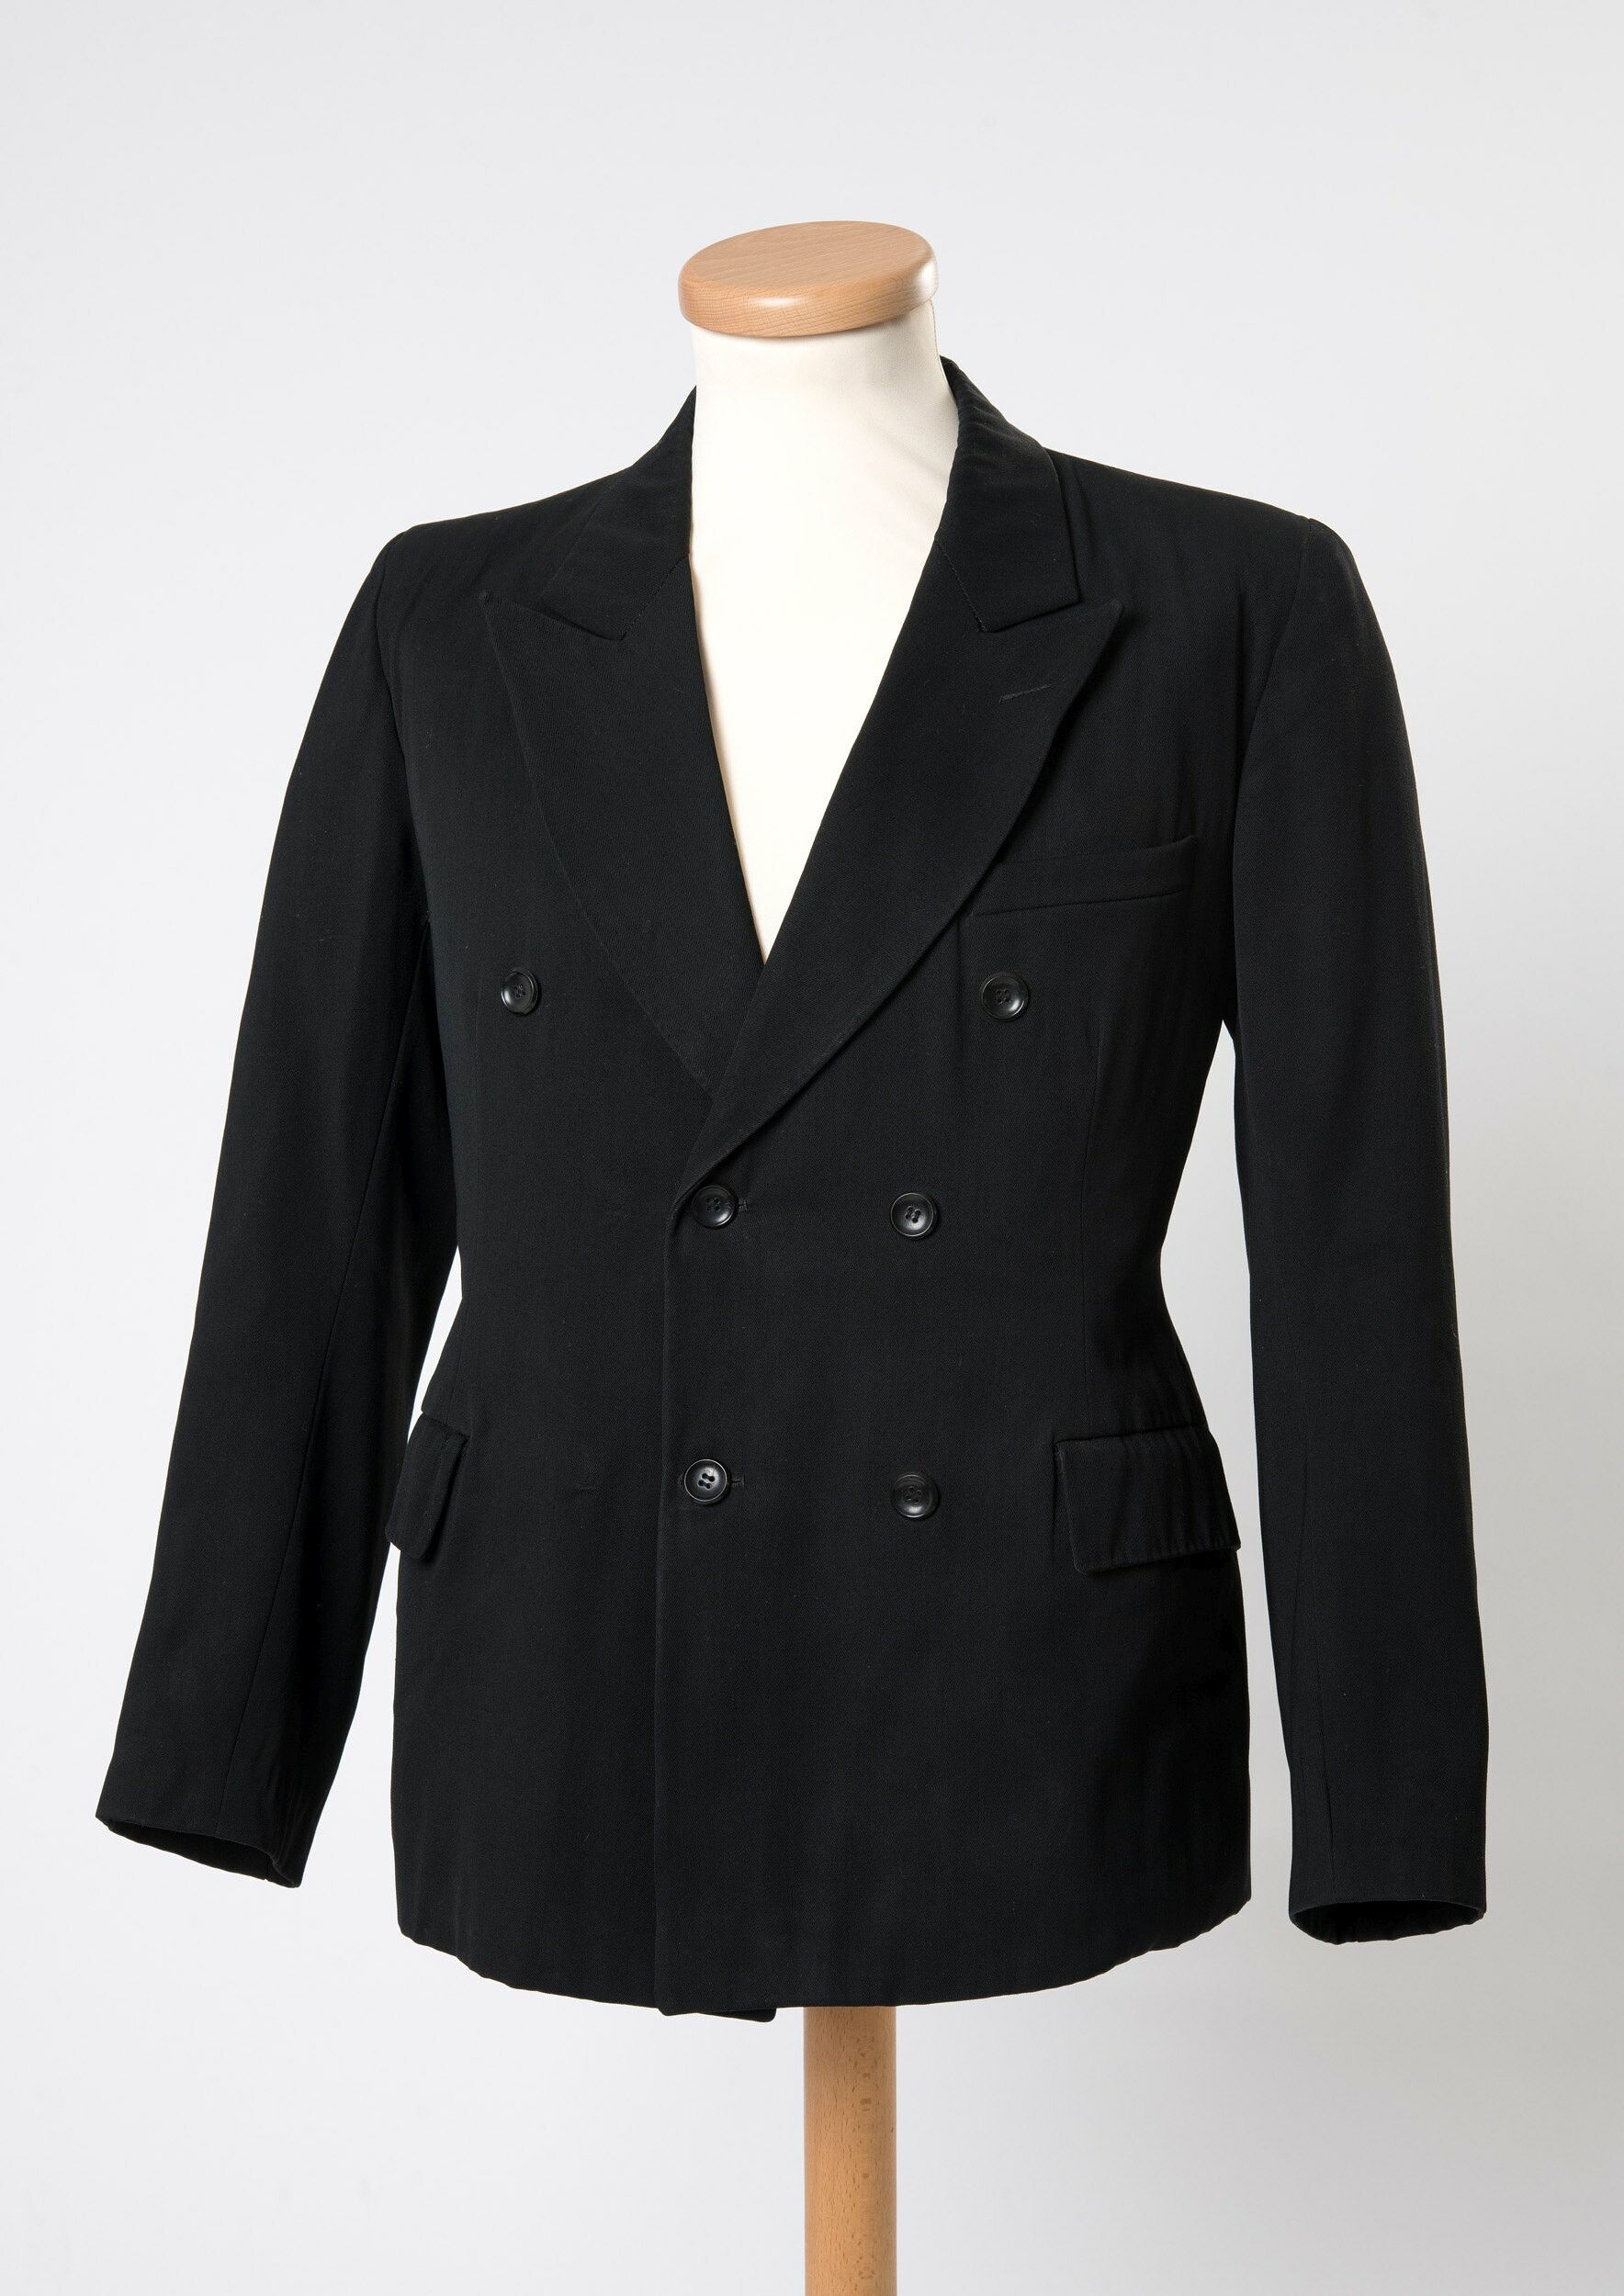 Kabát (Laczkó Dezső Múzeum CC BY-NC-SA)